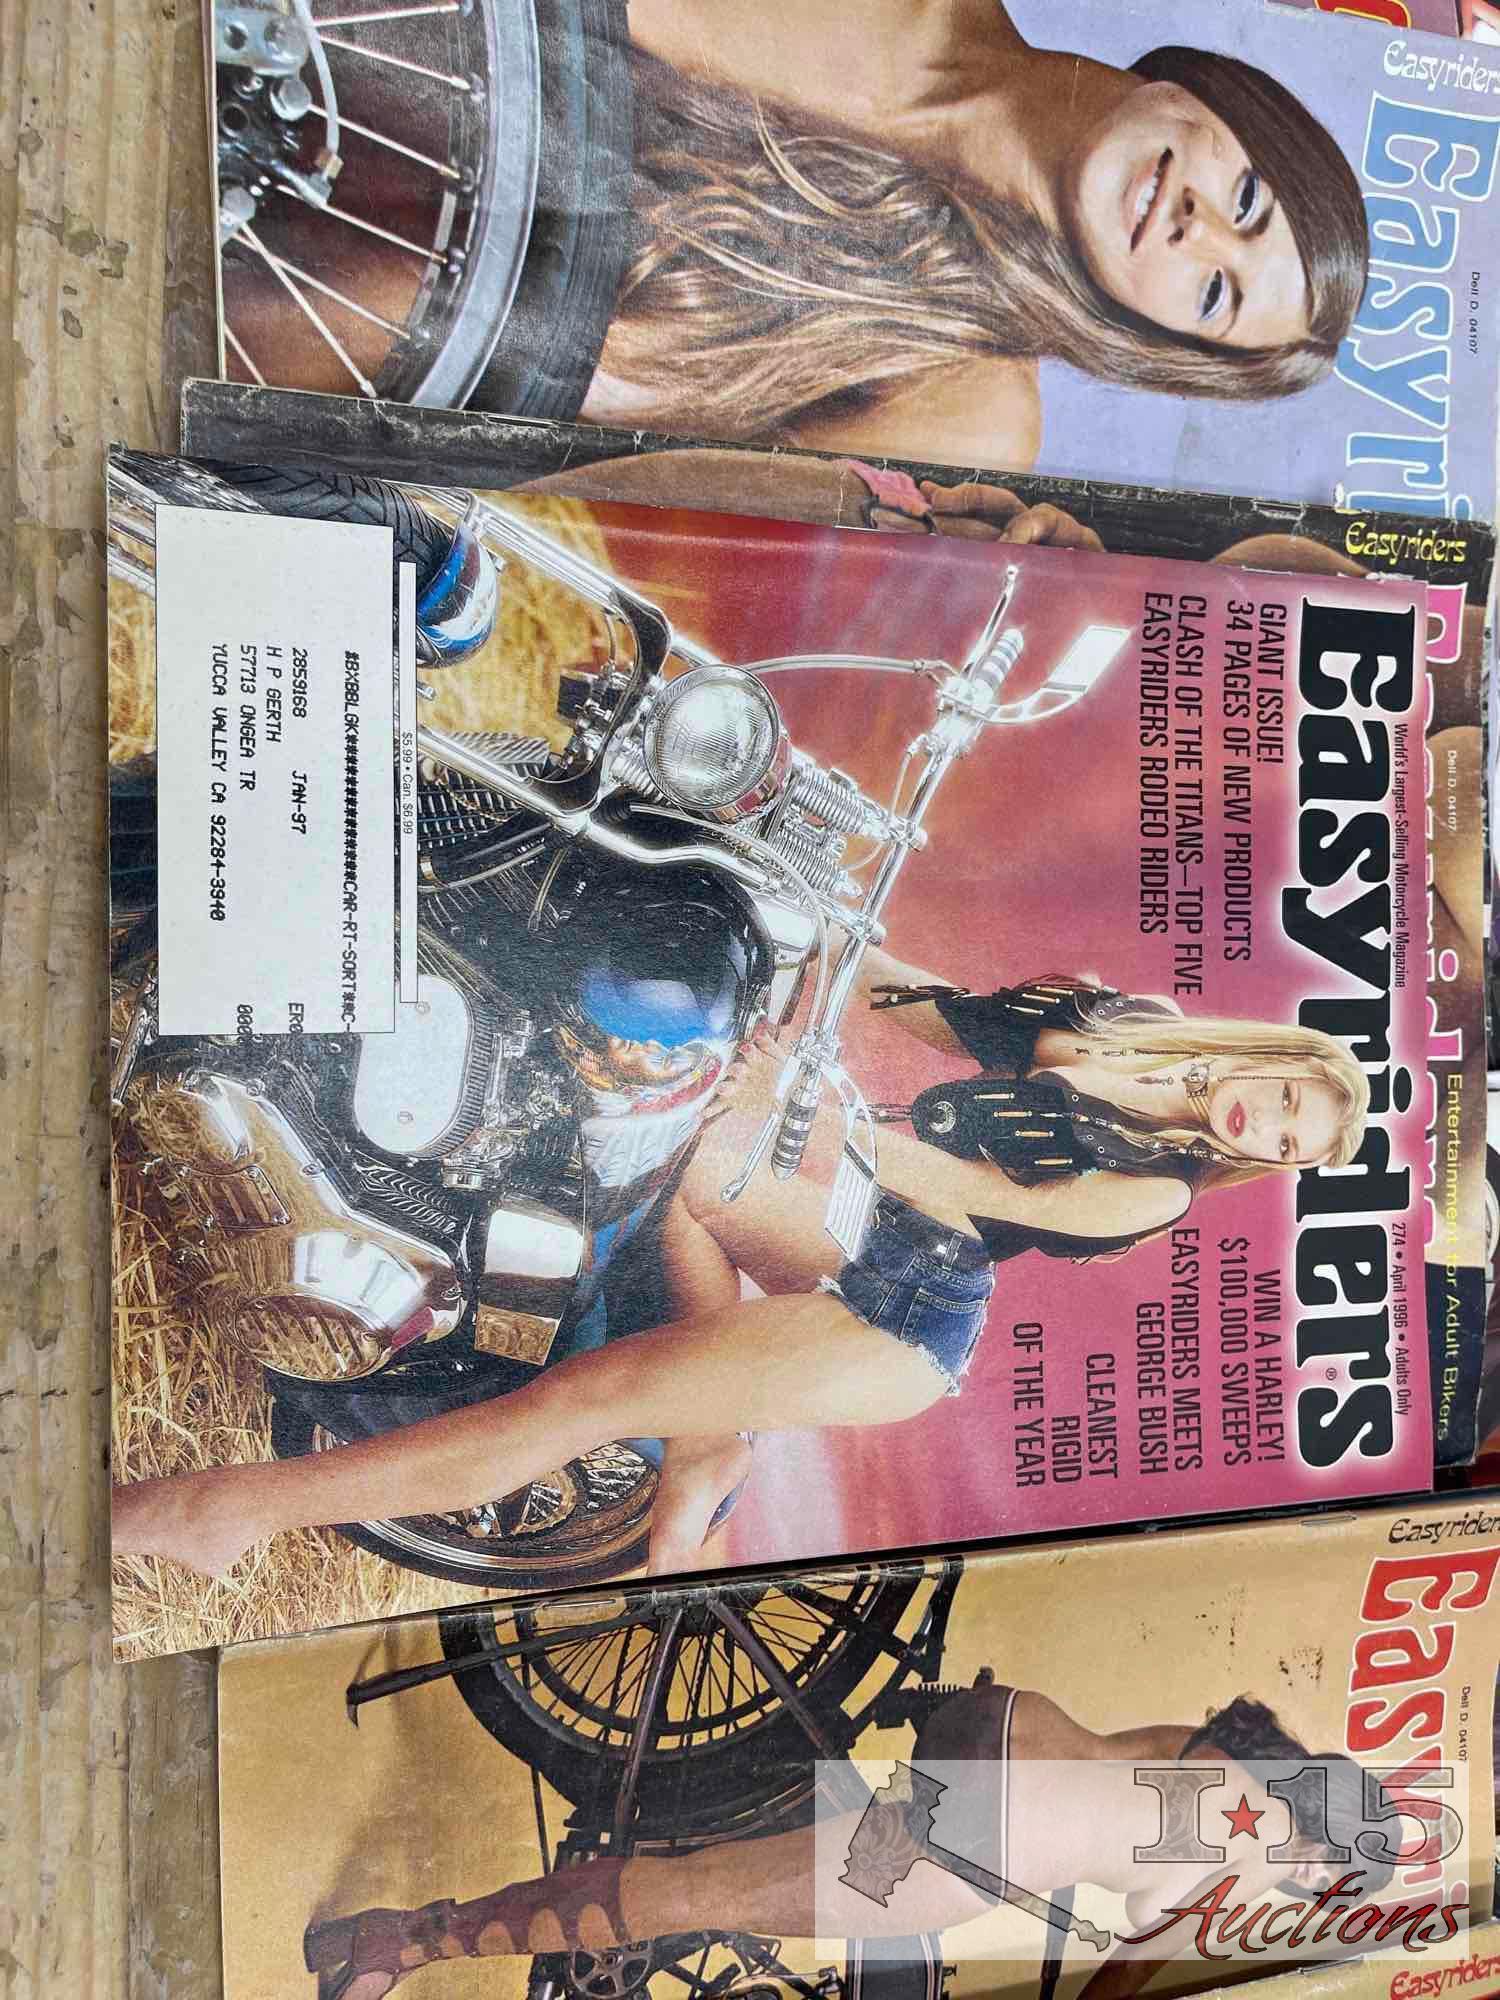 (24) Easyrider & Supercycle Magazines